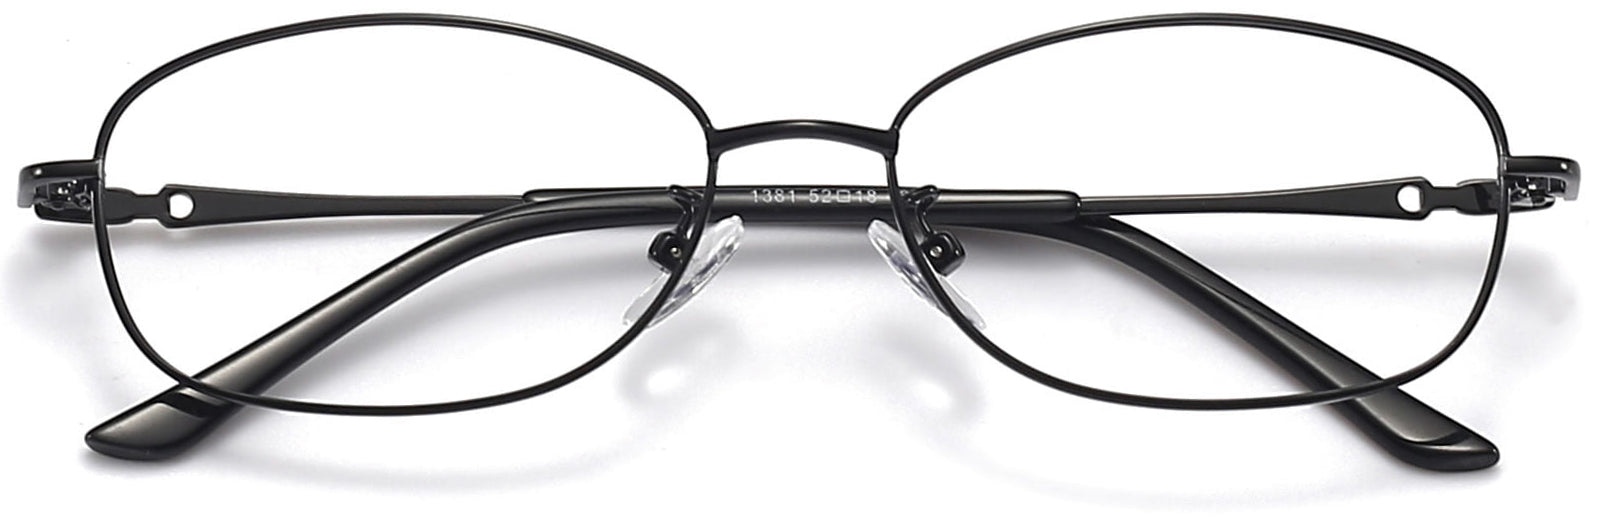 Kallie Round Black Eyeglasses from ANRRI, closed view